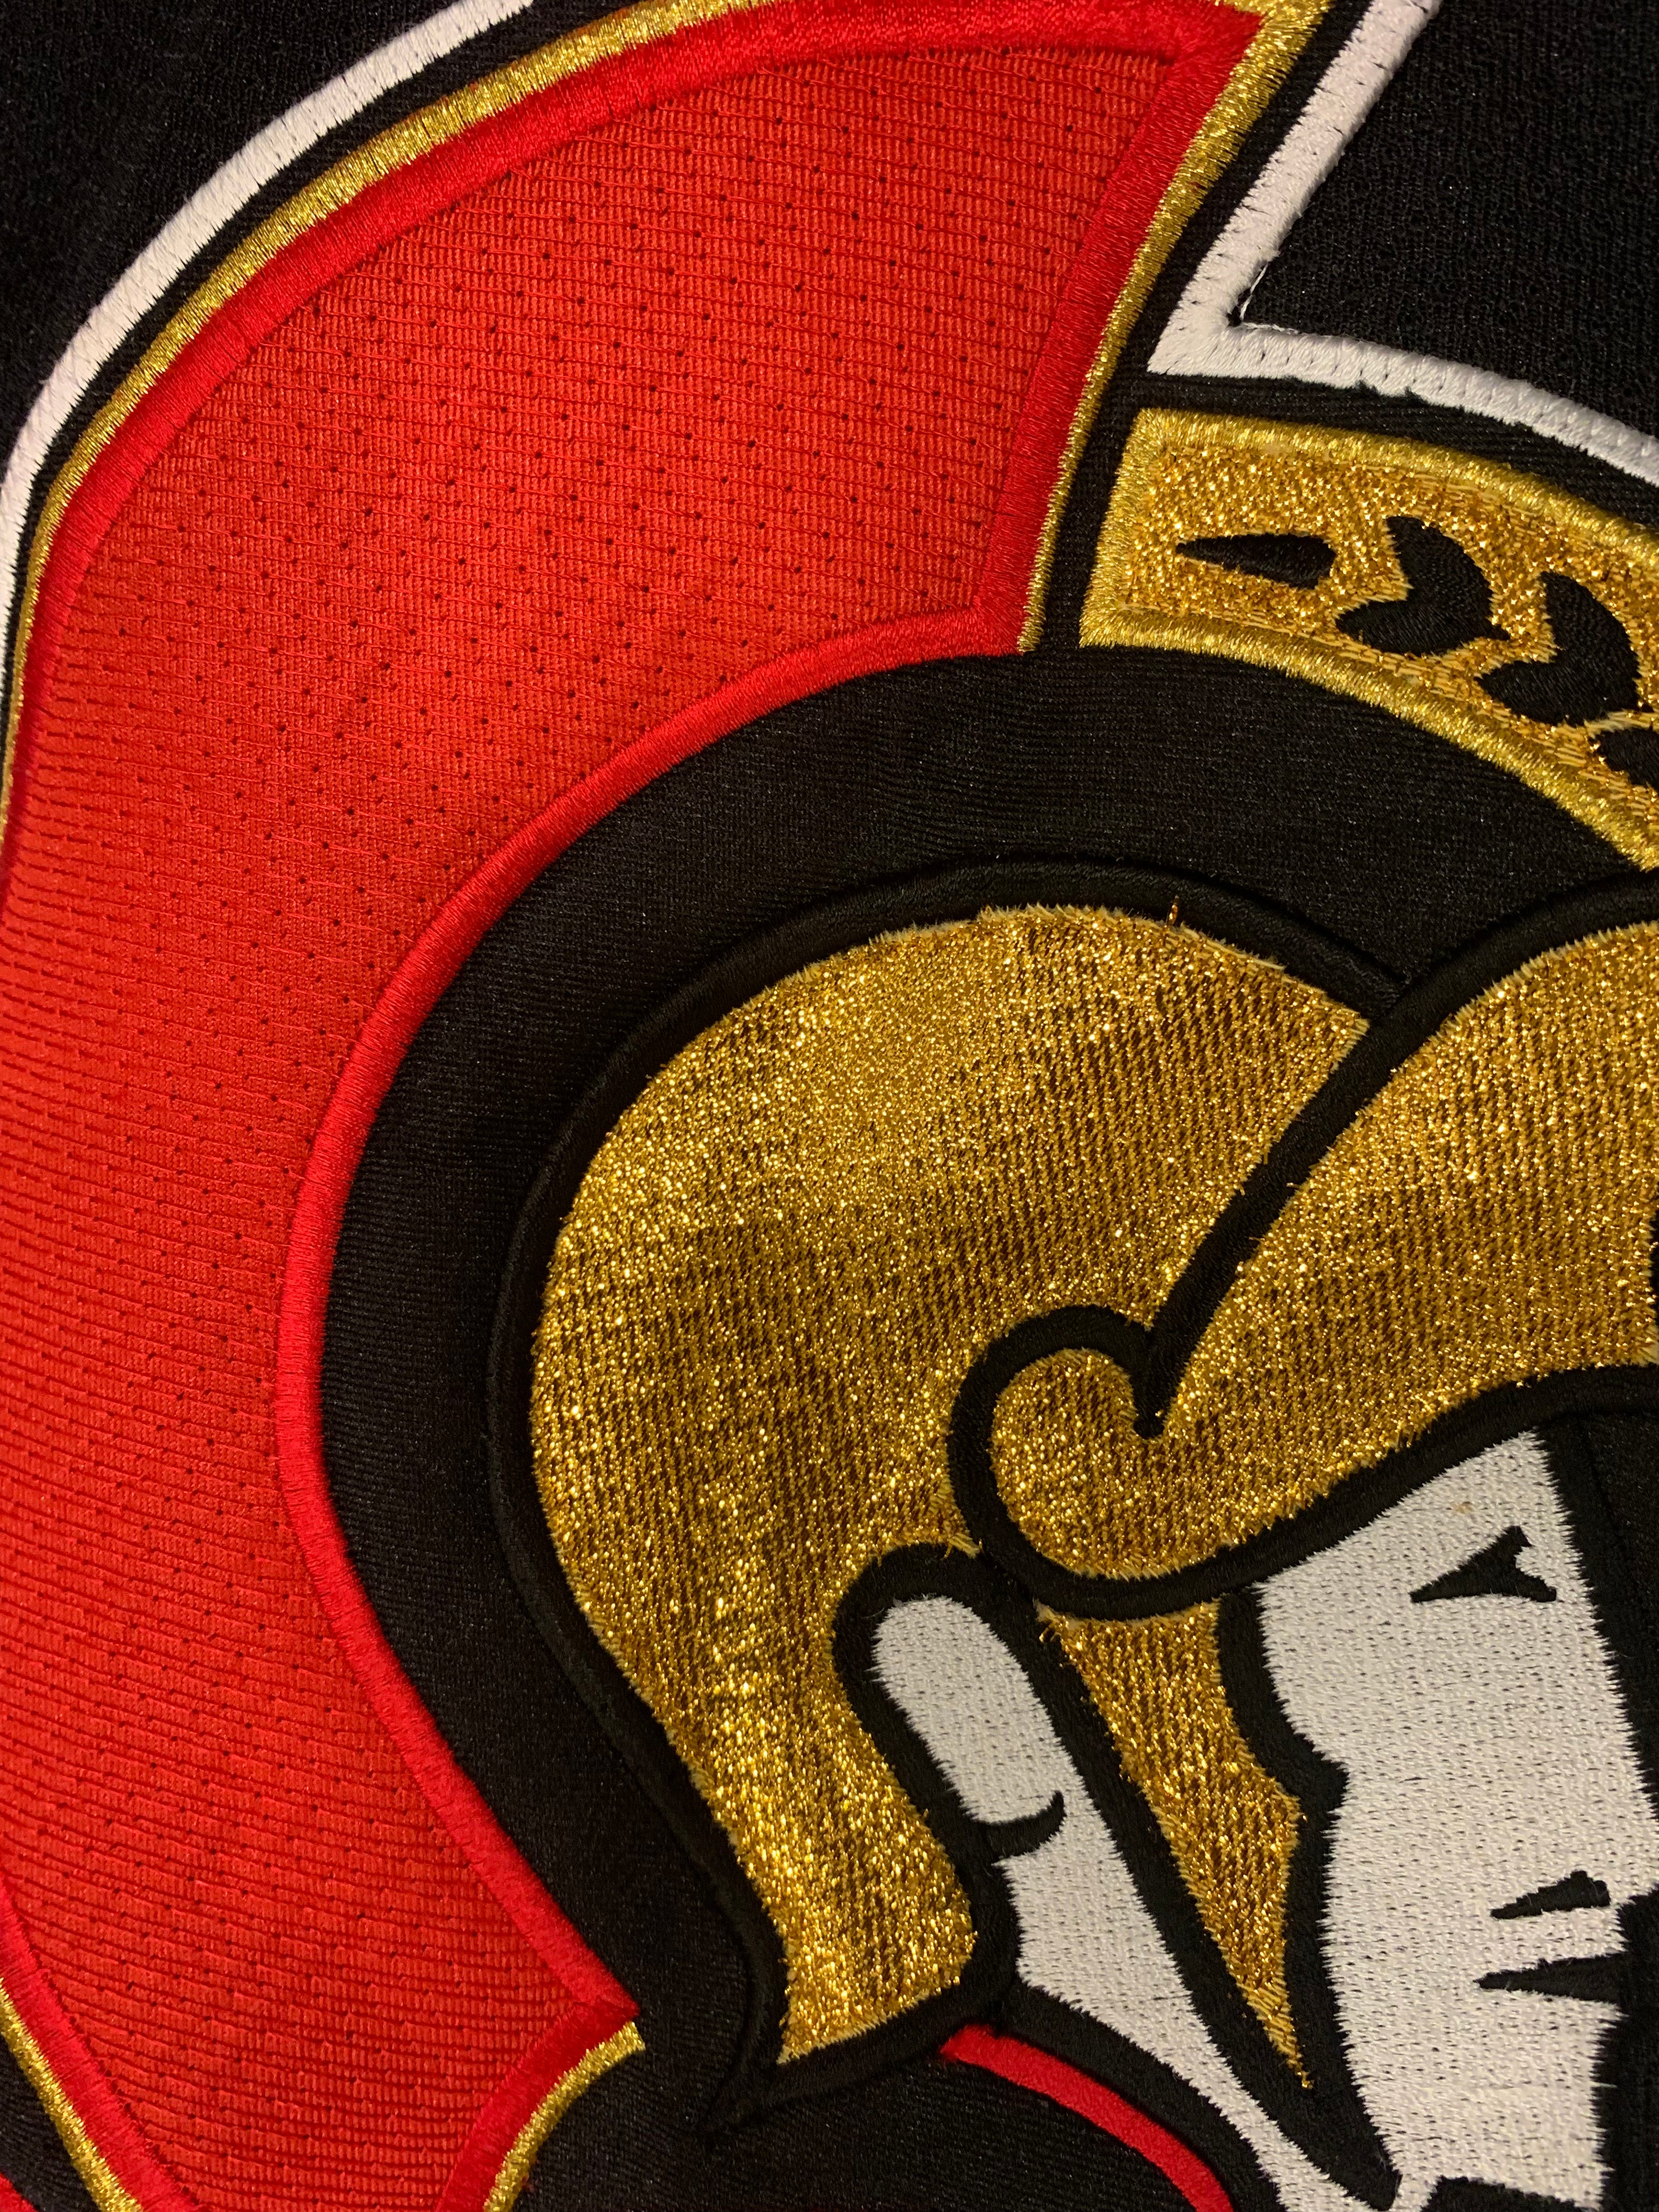 Ottawa Senators Practice Replica jersey